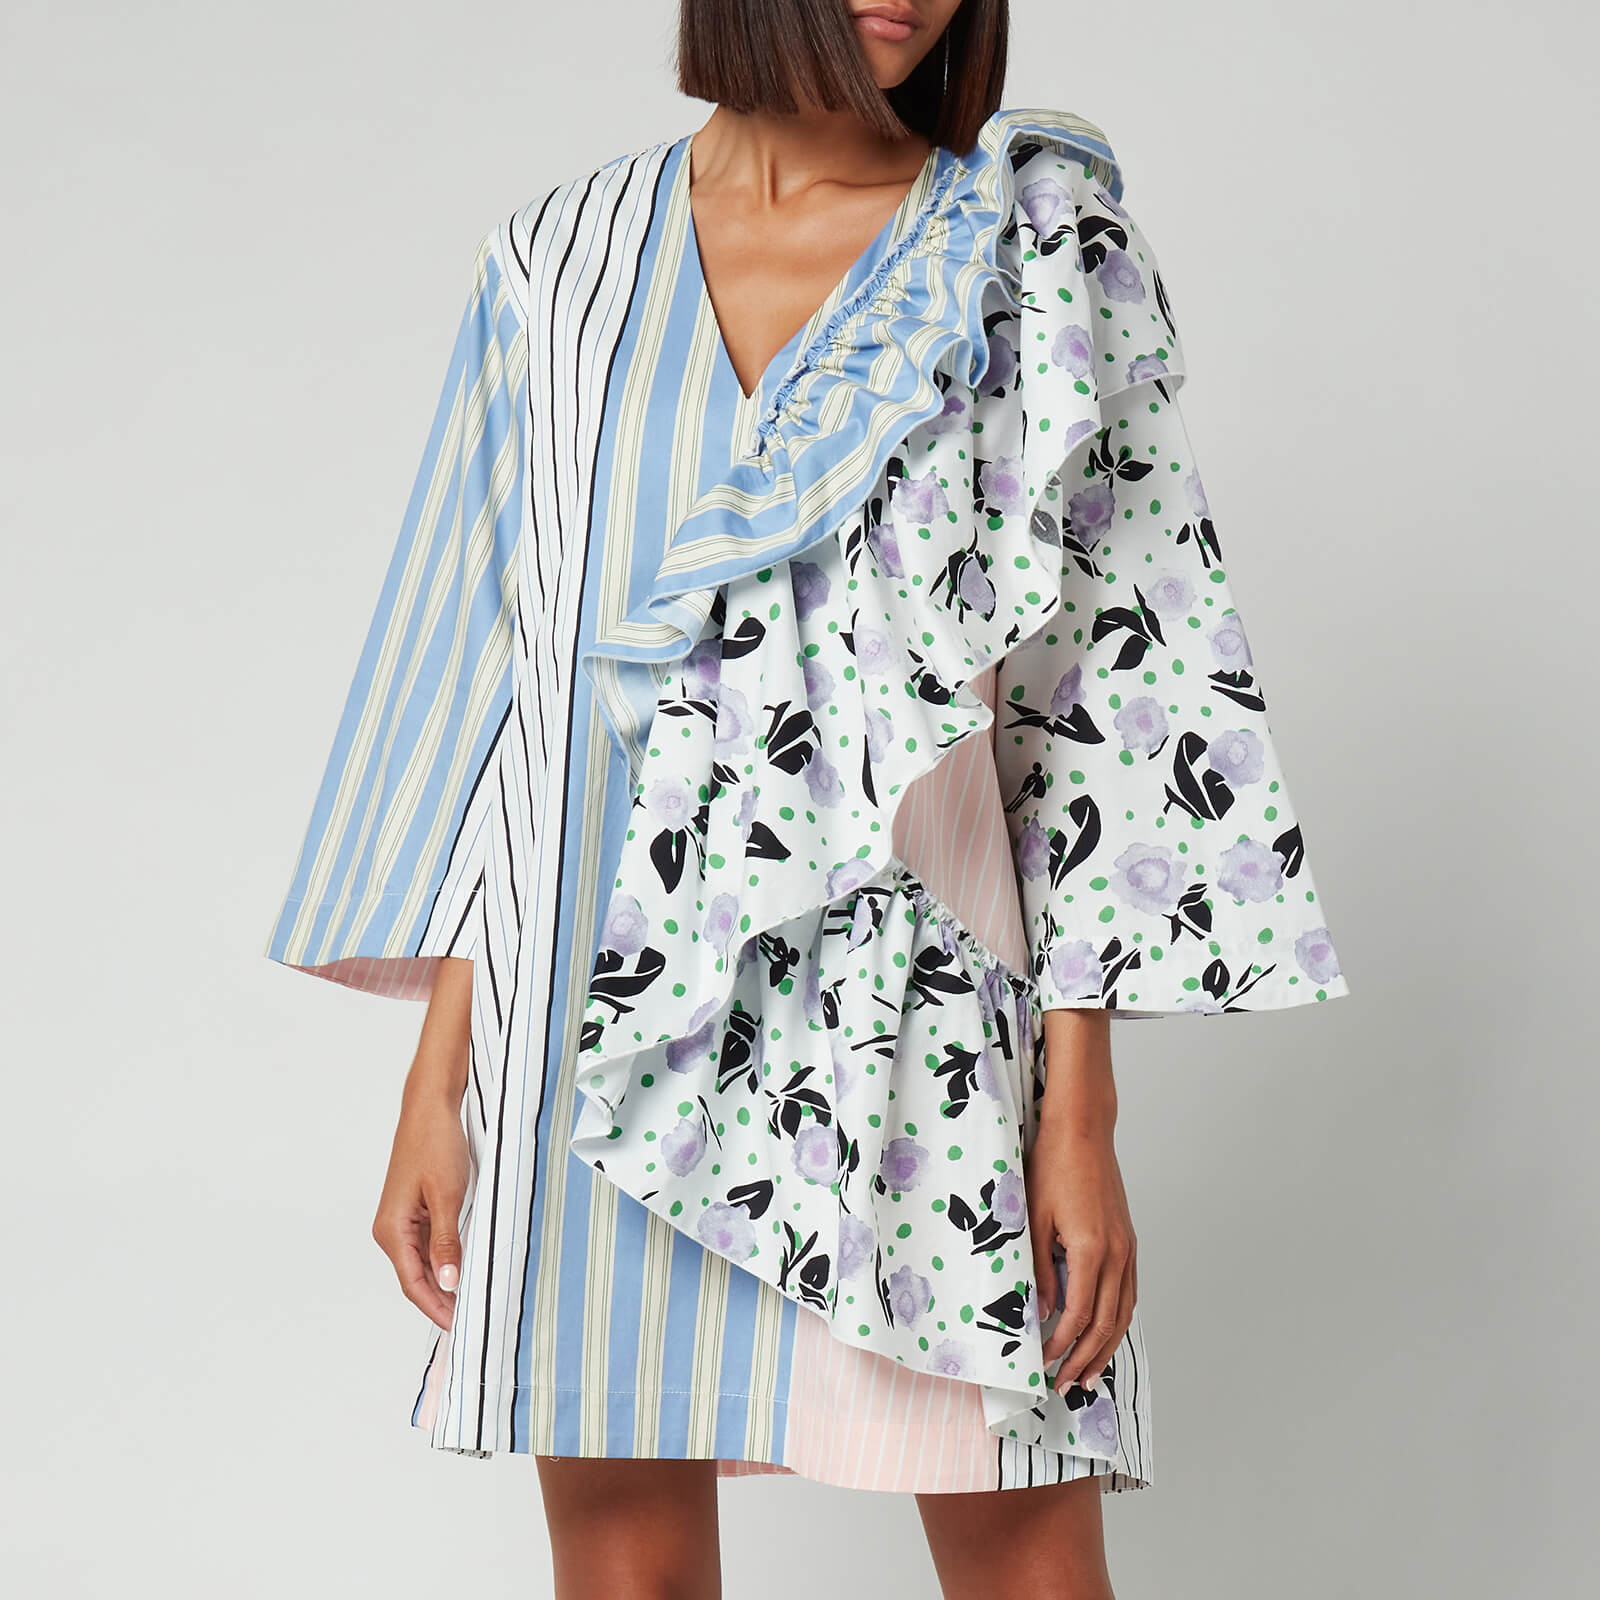 Stine Goya Women's Marina Cotton Dress - Flowermarket Stripes - M